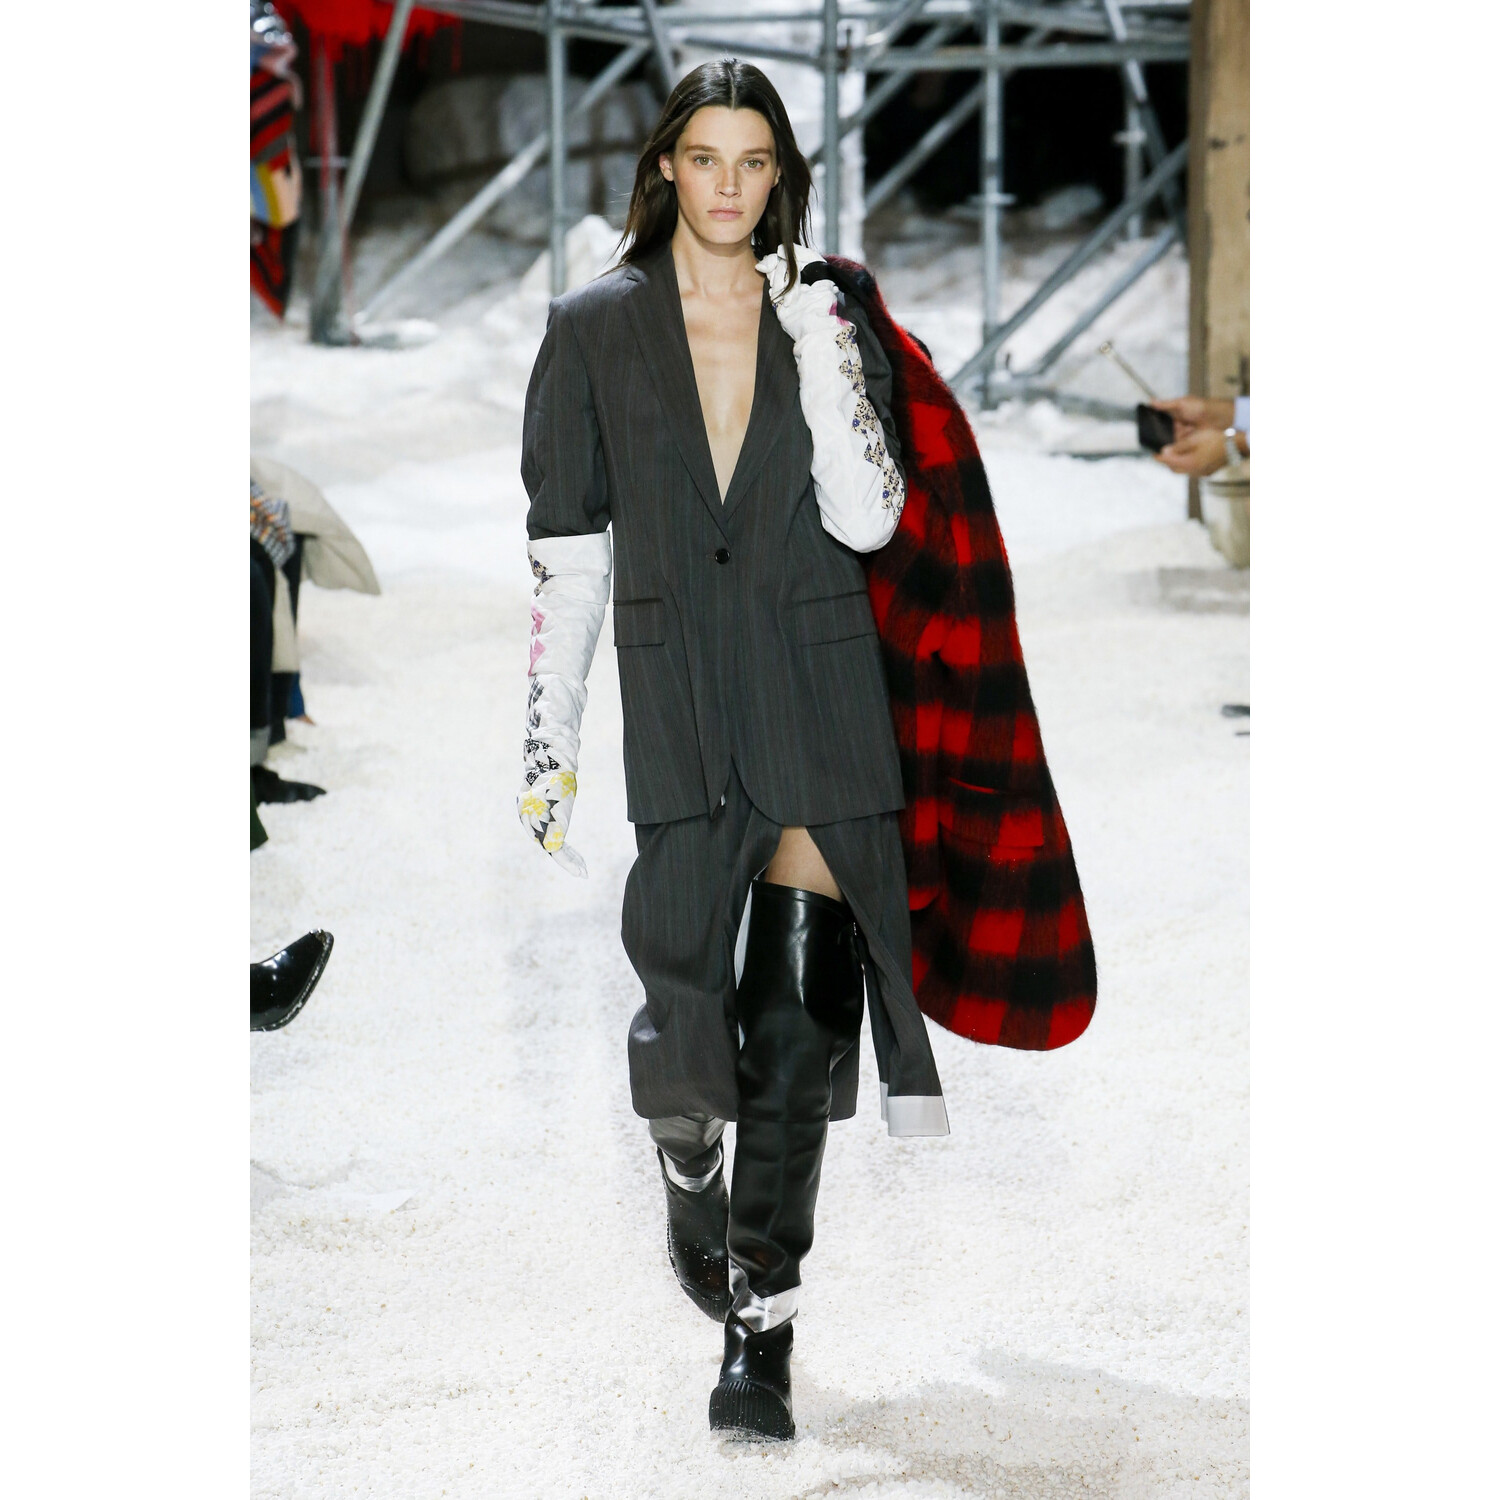 Фото CALVIN KLEIN Fall 2018 Ready-to-Wear Calvin Klein Кельвин Кляйн осень зима 2018 коллекция неделя моды в Нью Йорке Mainstyles